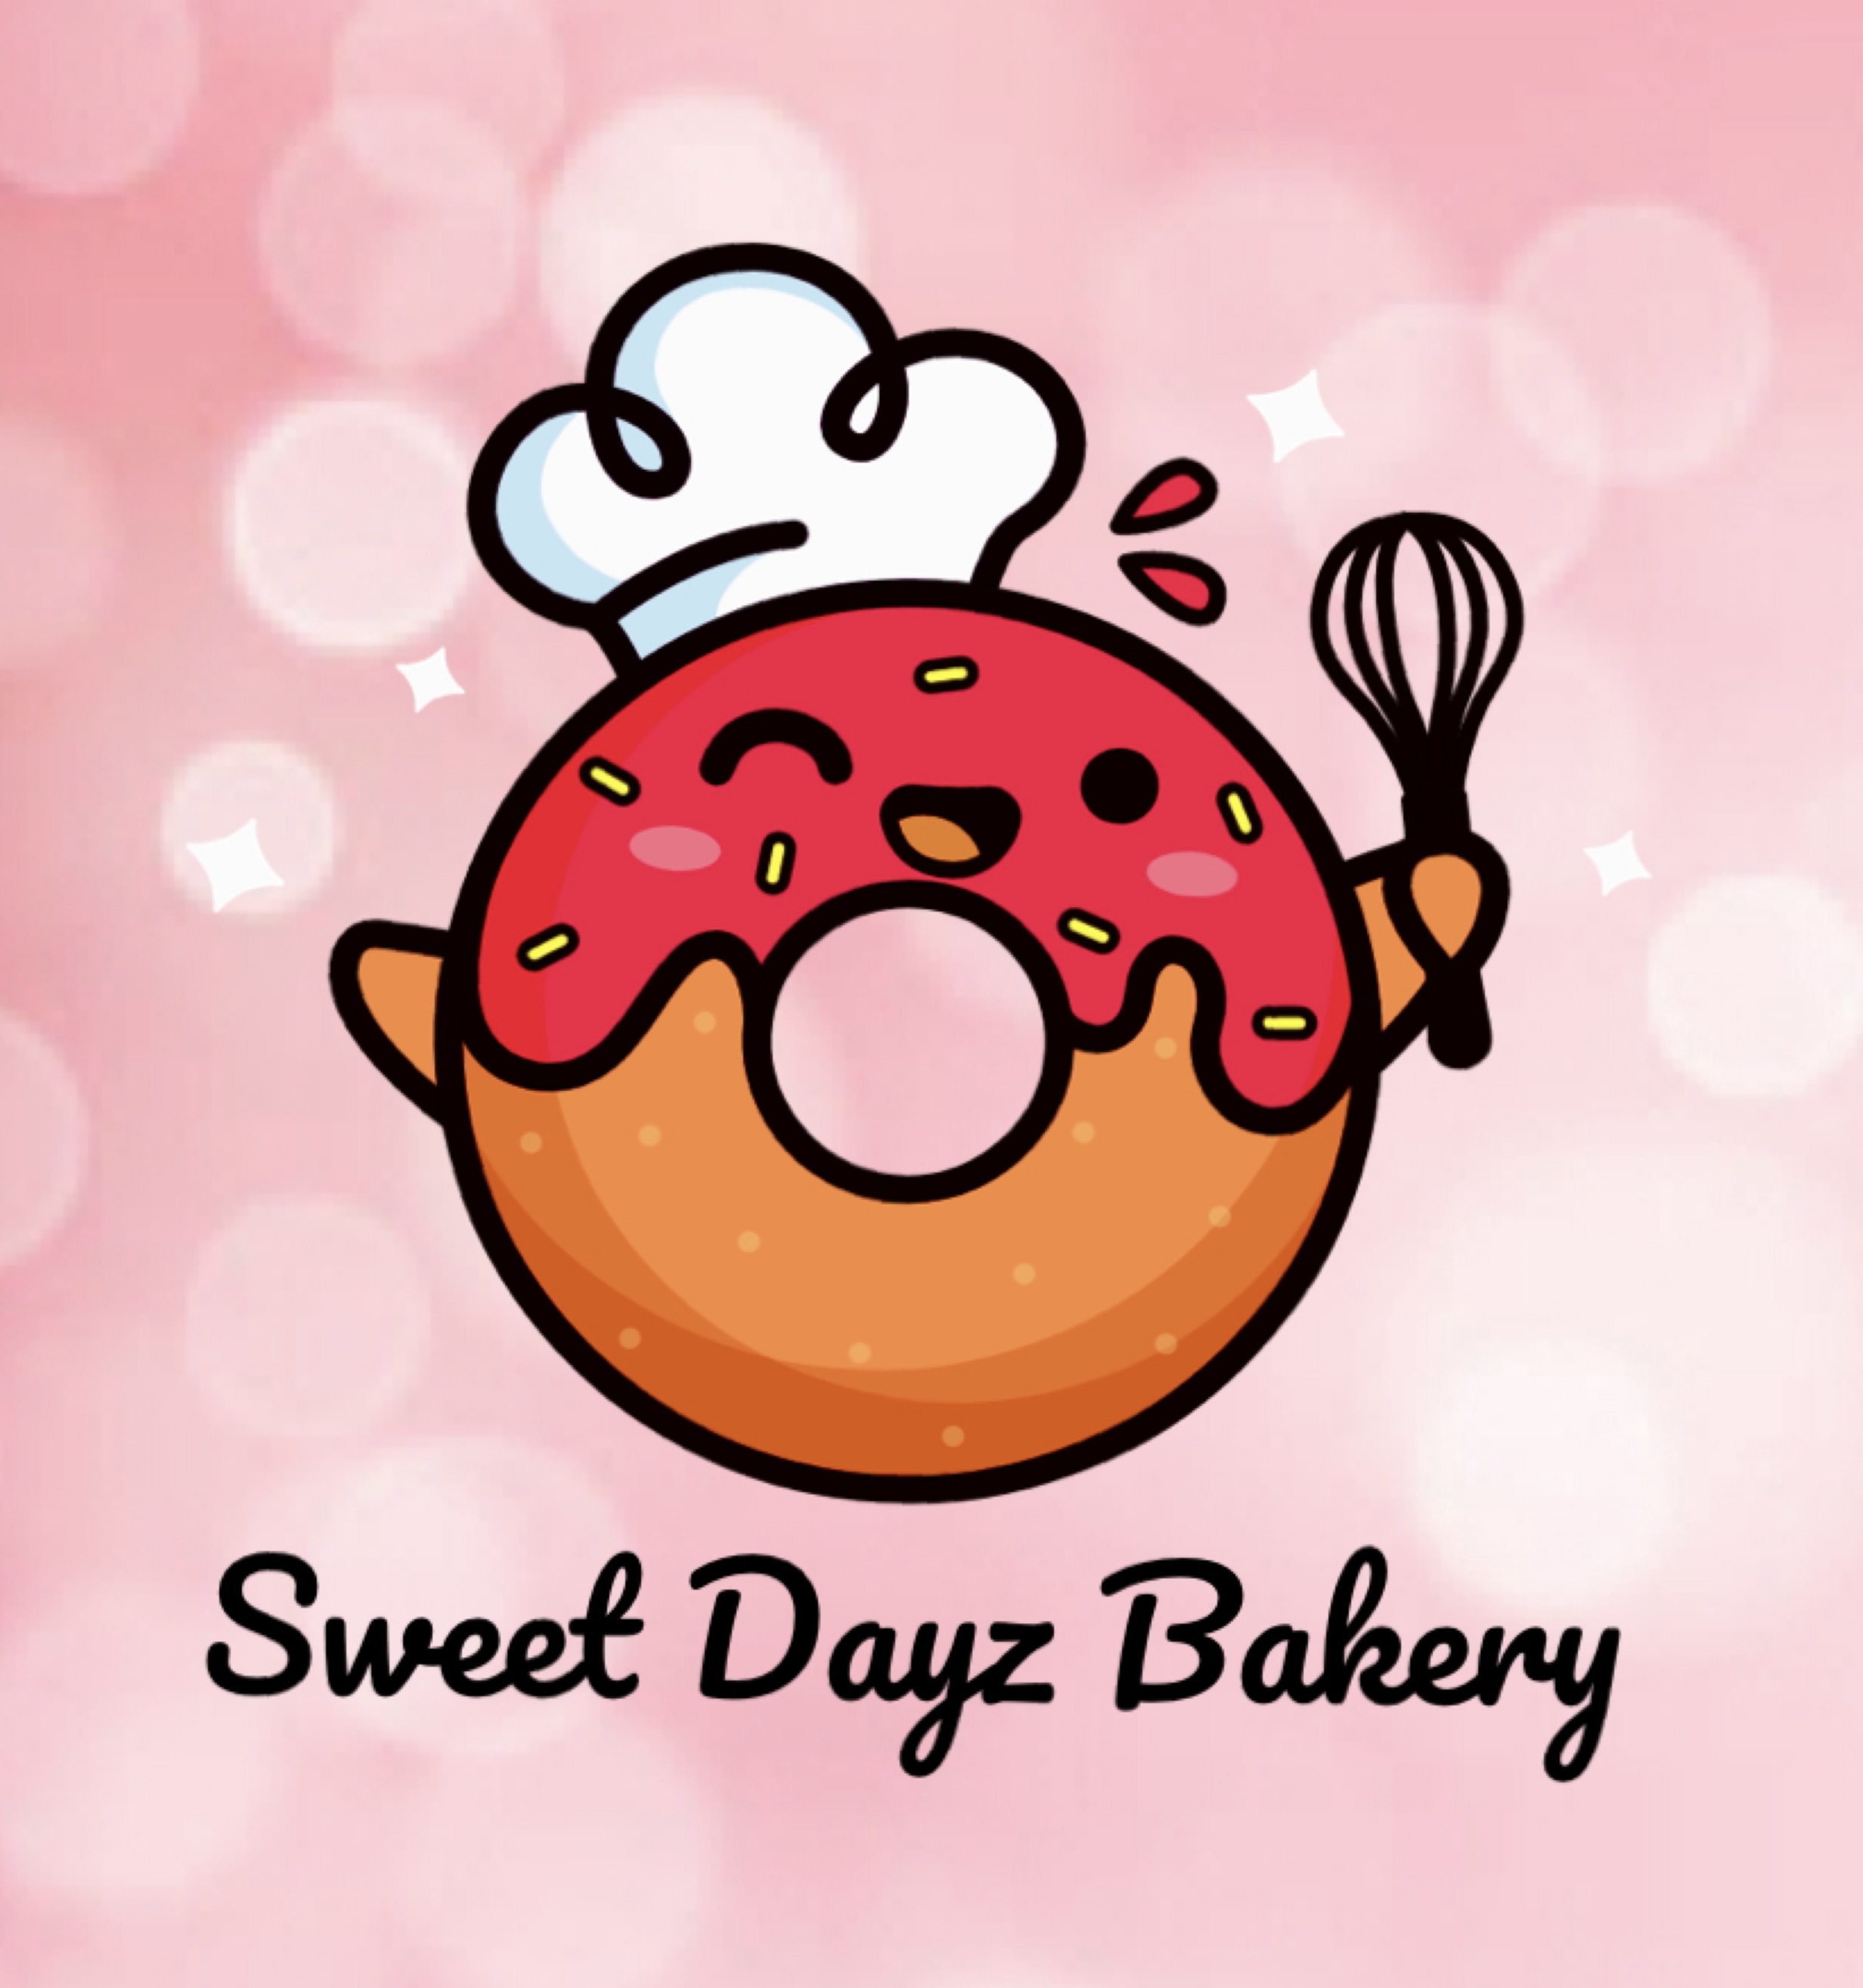 Sweet Dayz Bakery